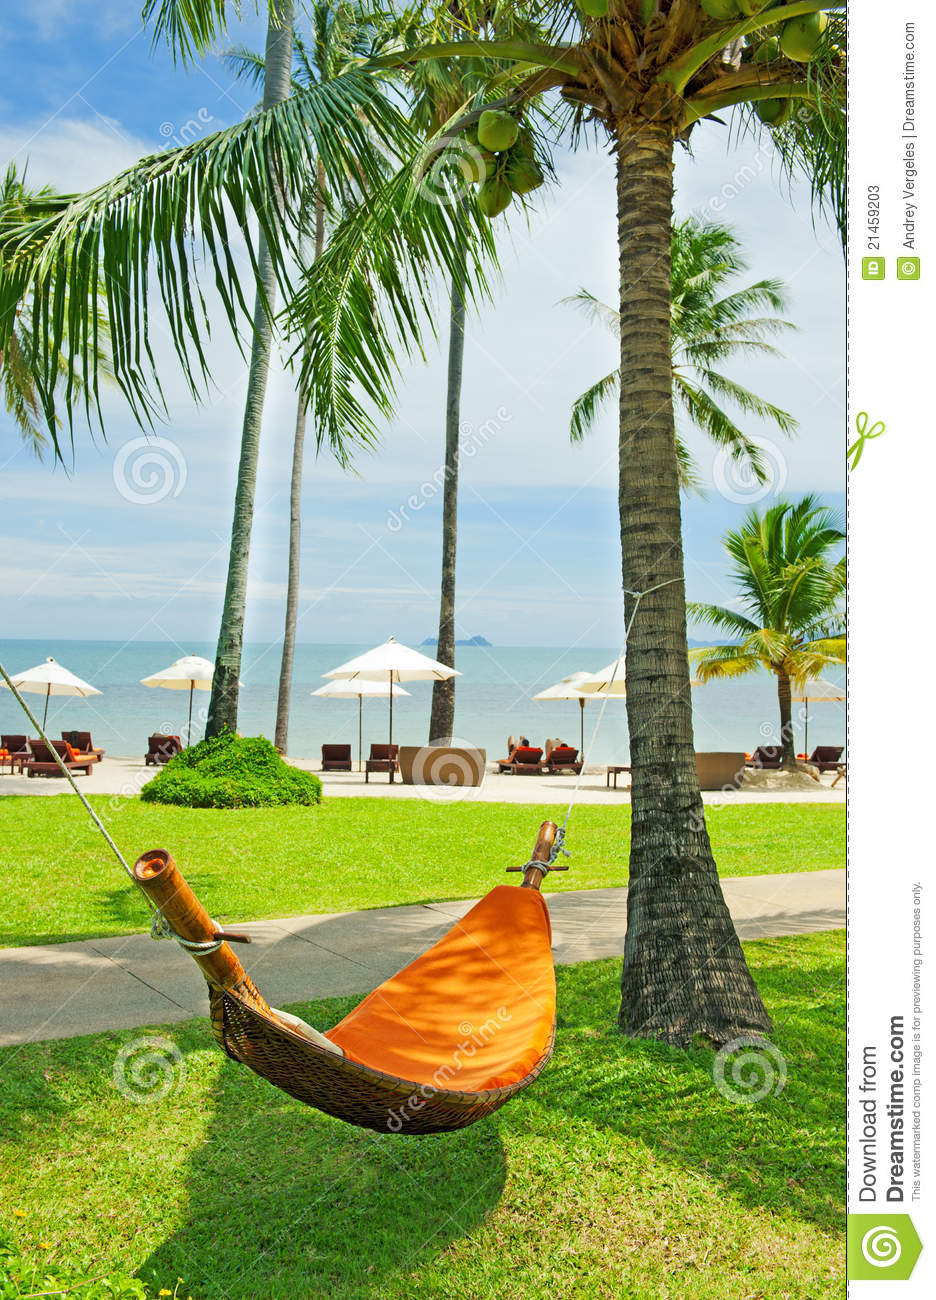 Empty Hammock Between Palm Trees Stock Photos   Image  21459203